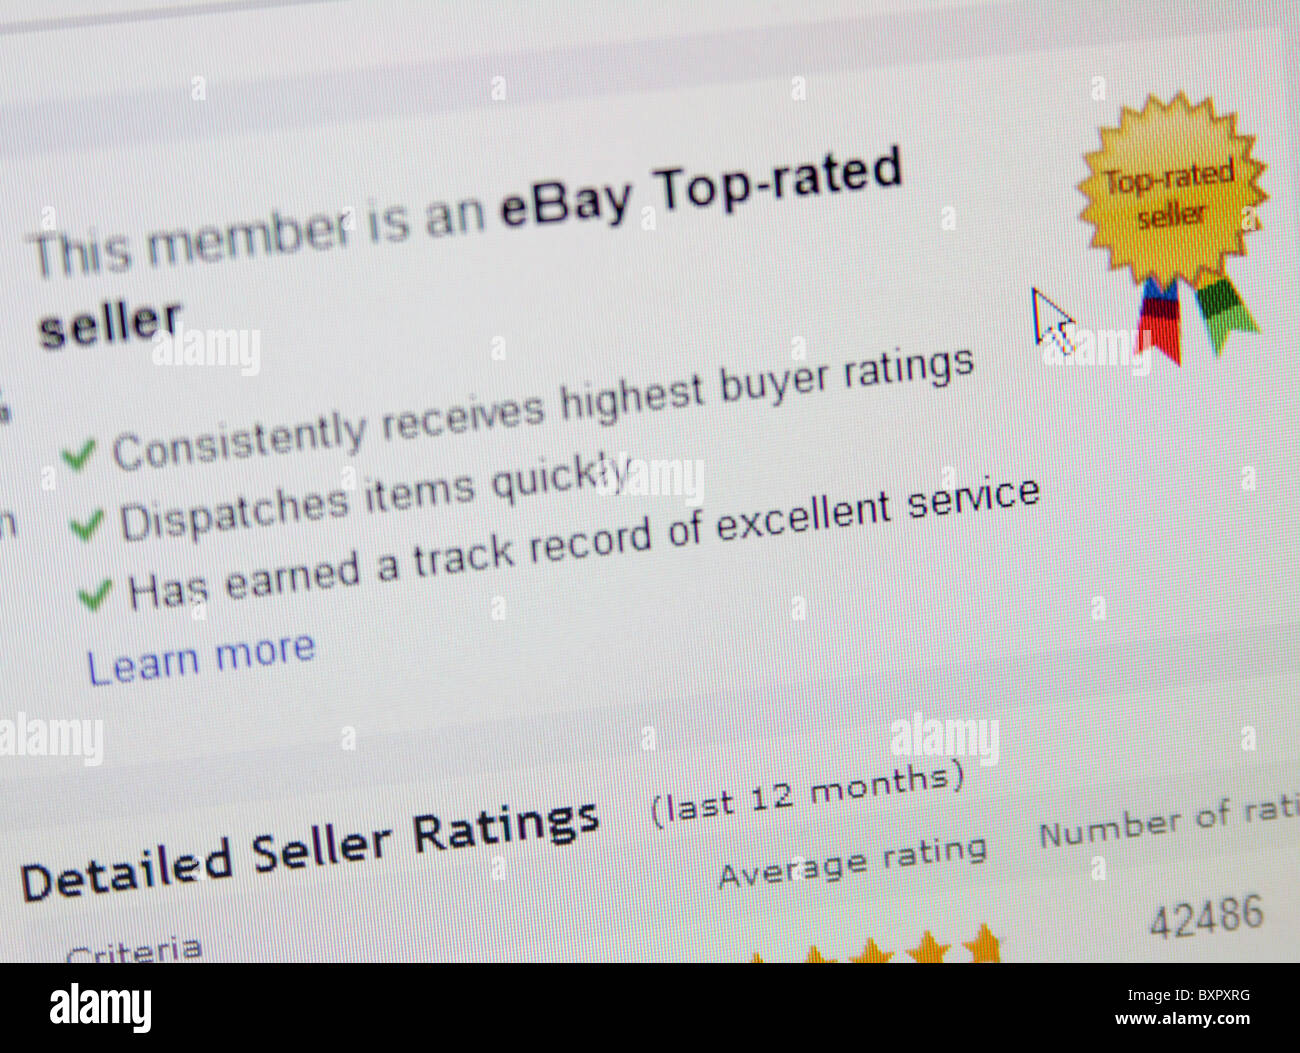 ebay-top-rated-seller-BXPXRG.jpg